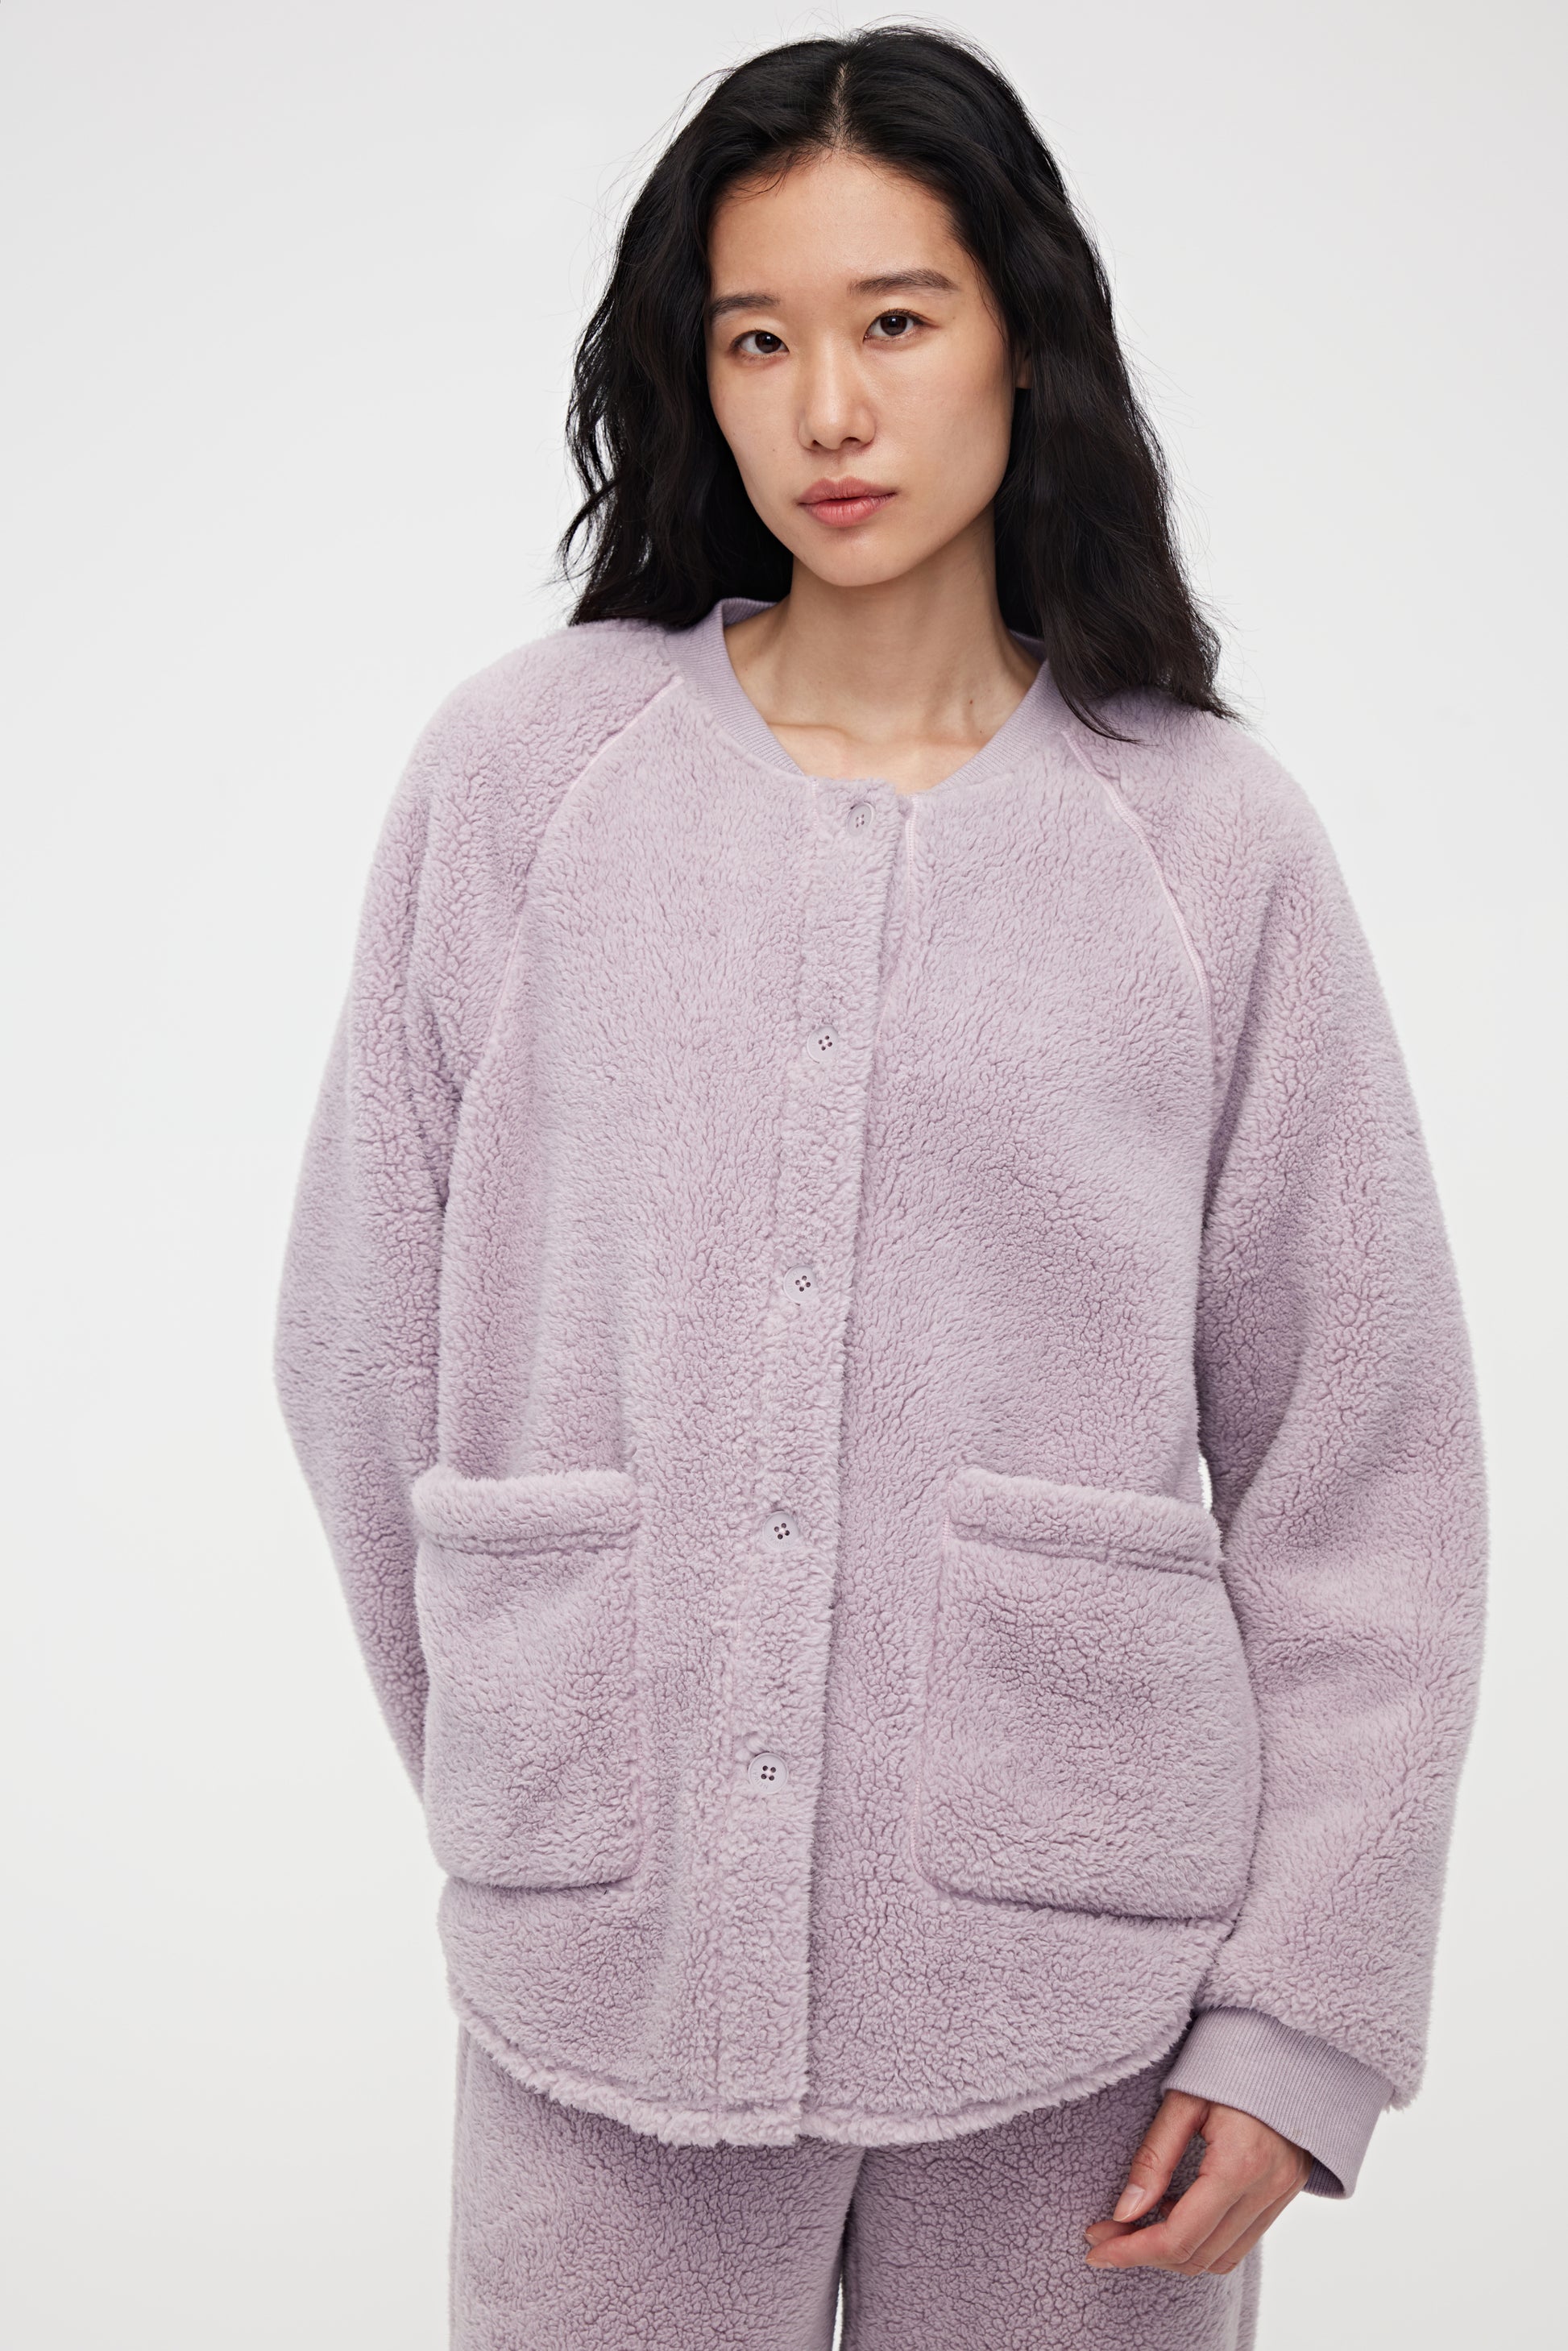 AherBiu Pajamas Pants for Women Sherpa Fleece Sleepwear Warm